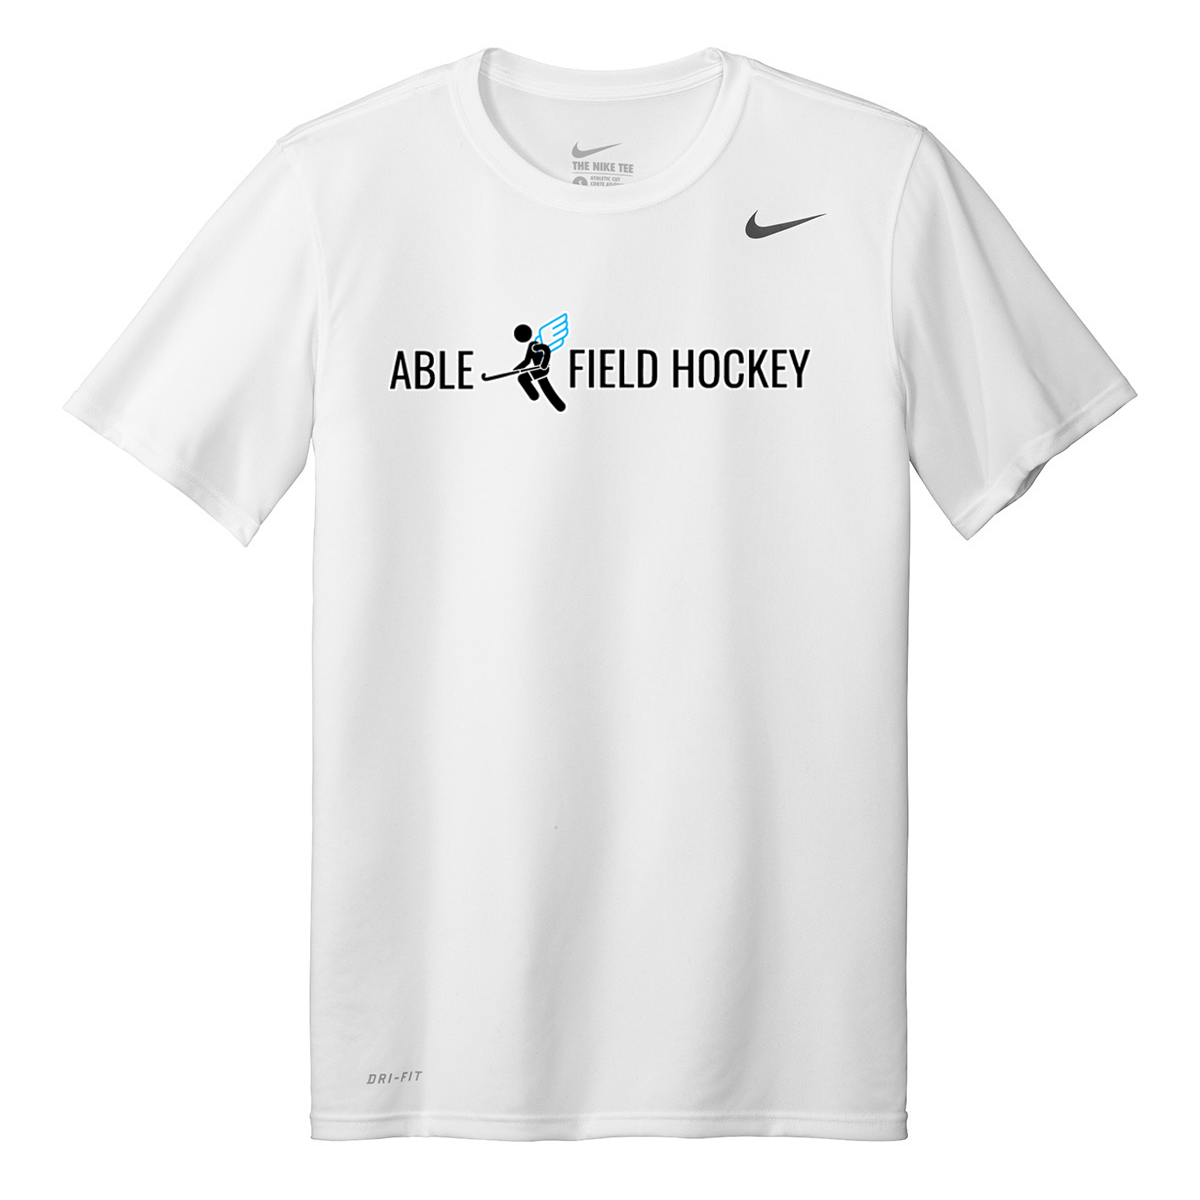 Able Field Hockey Nike Legend Tee